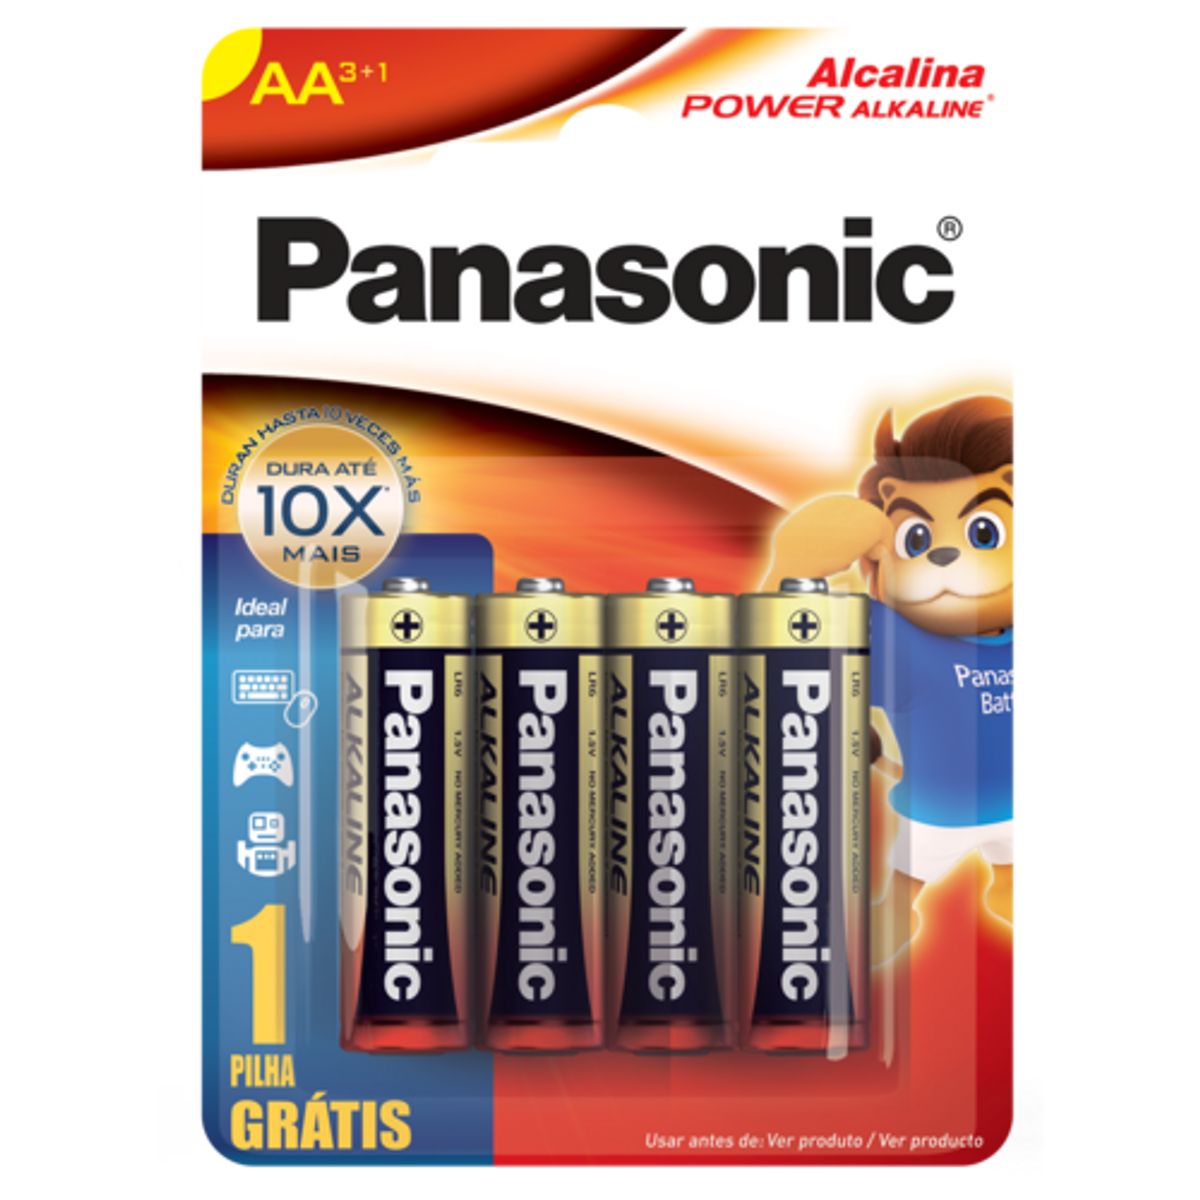 Pilha Panasonic AA Alcalina 3+1 Unidade